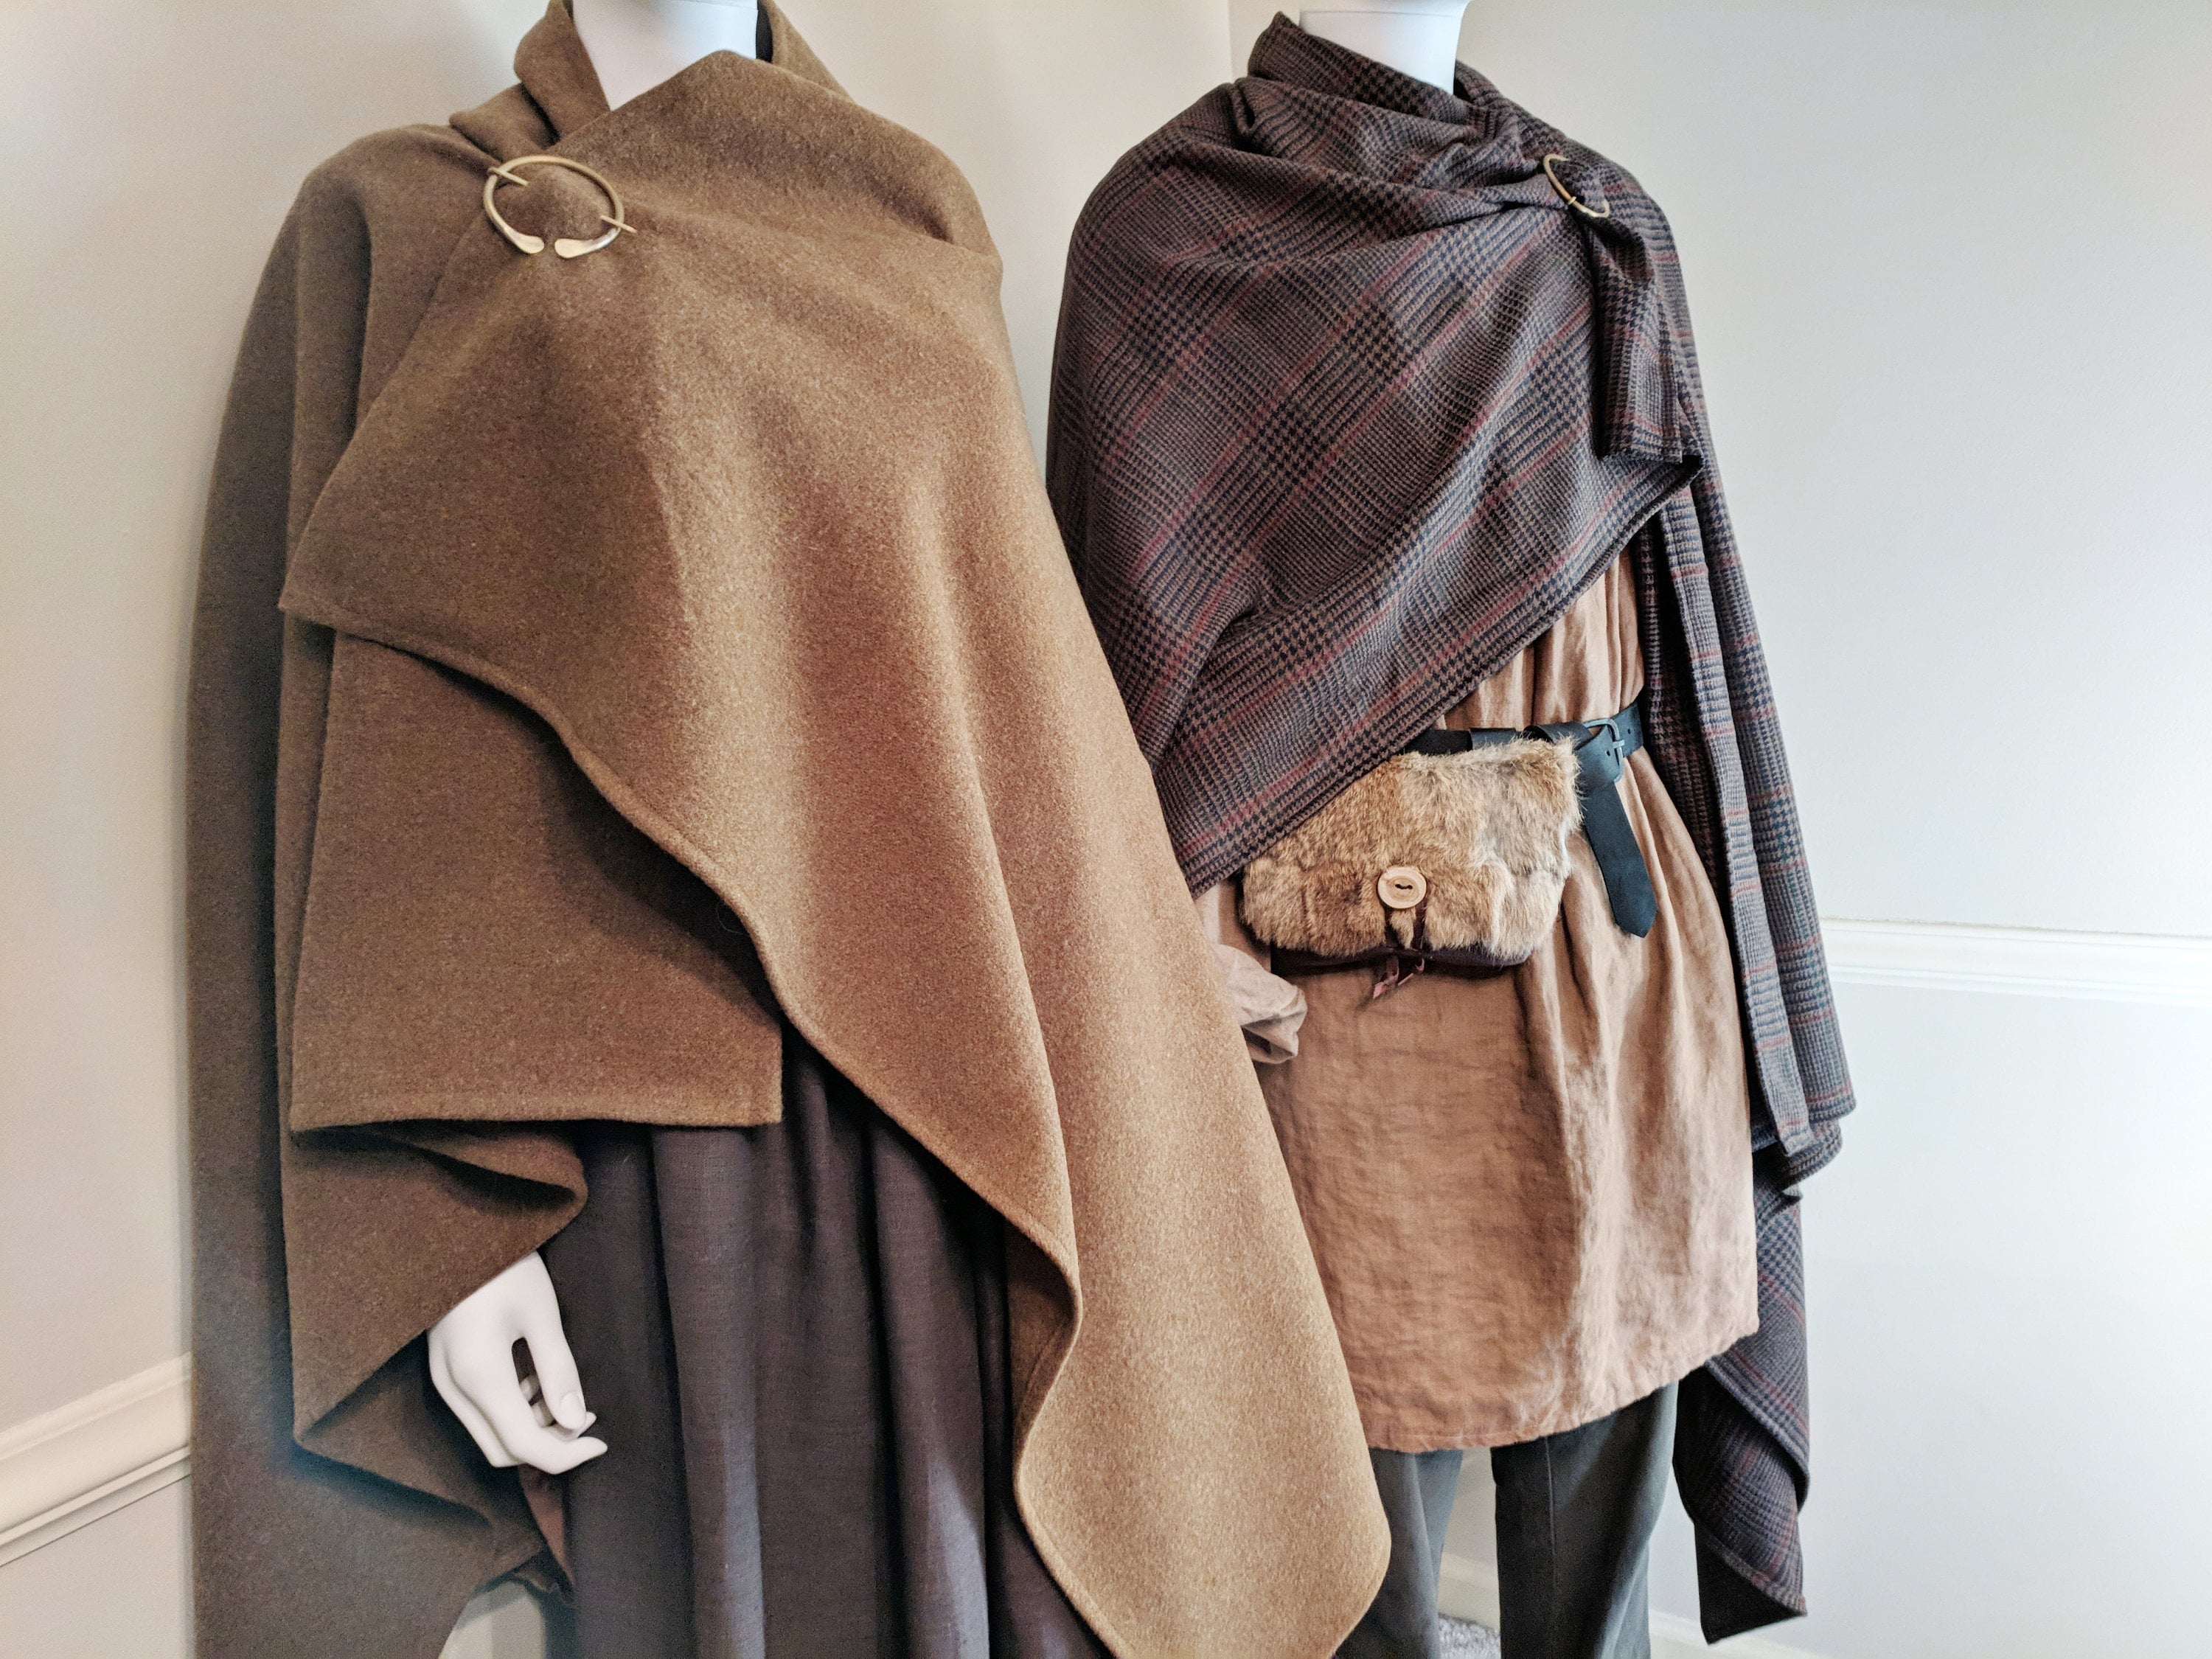 Spare Cloak Pin - renaissance clothing, costumes